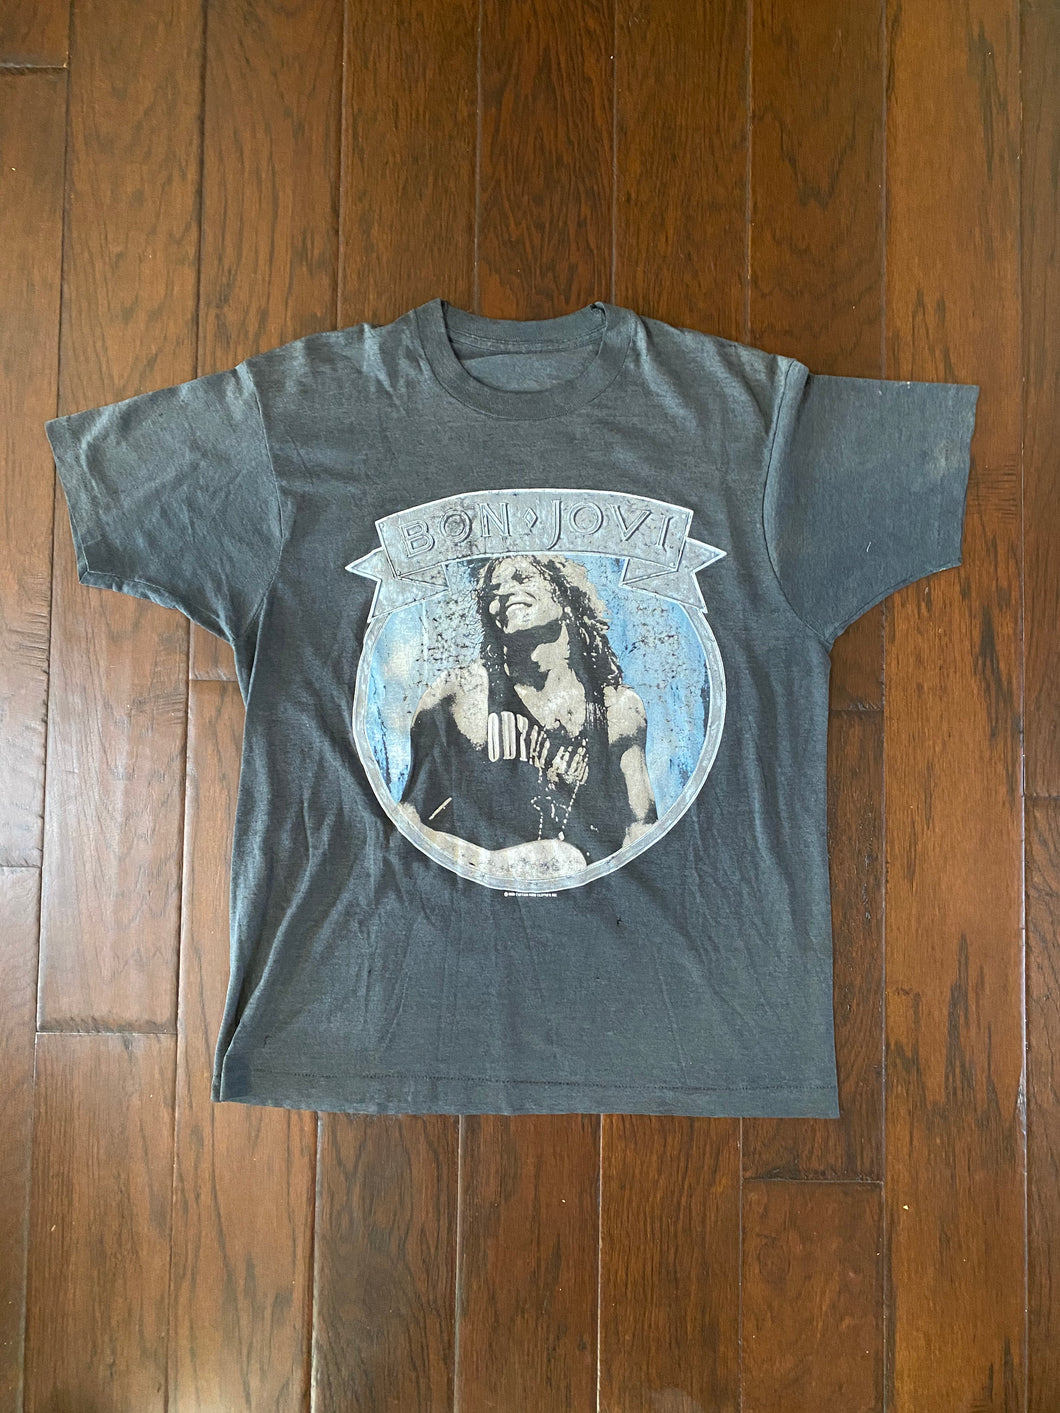 Bon Jovi 1989 “New Jersey” Vintage Distressed T-shirt